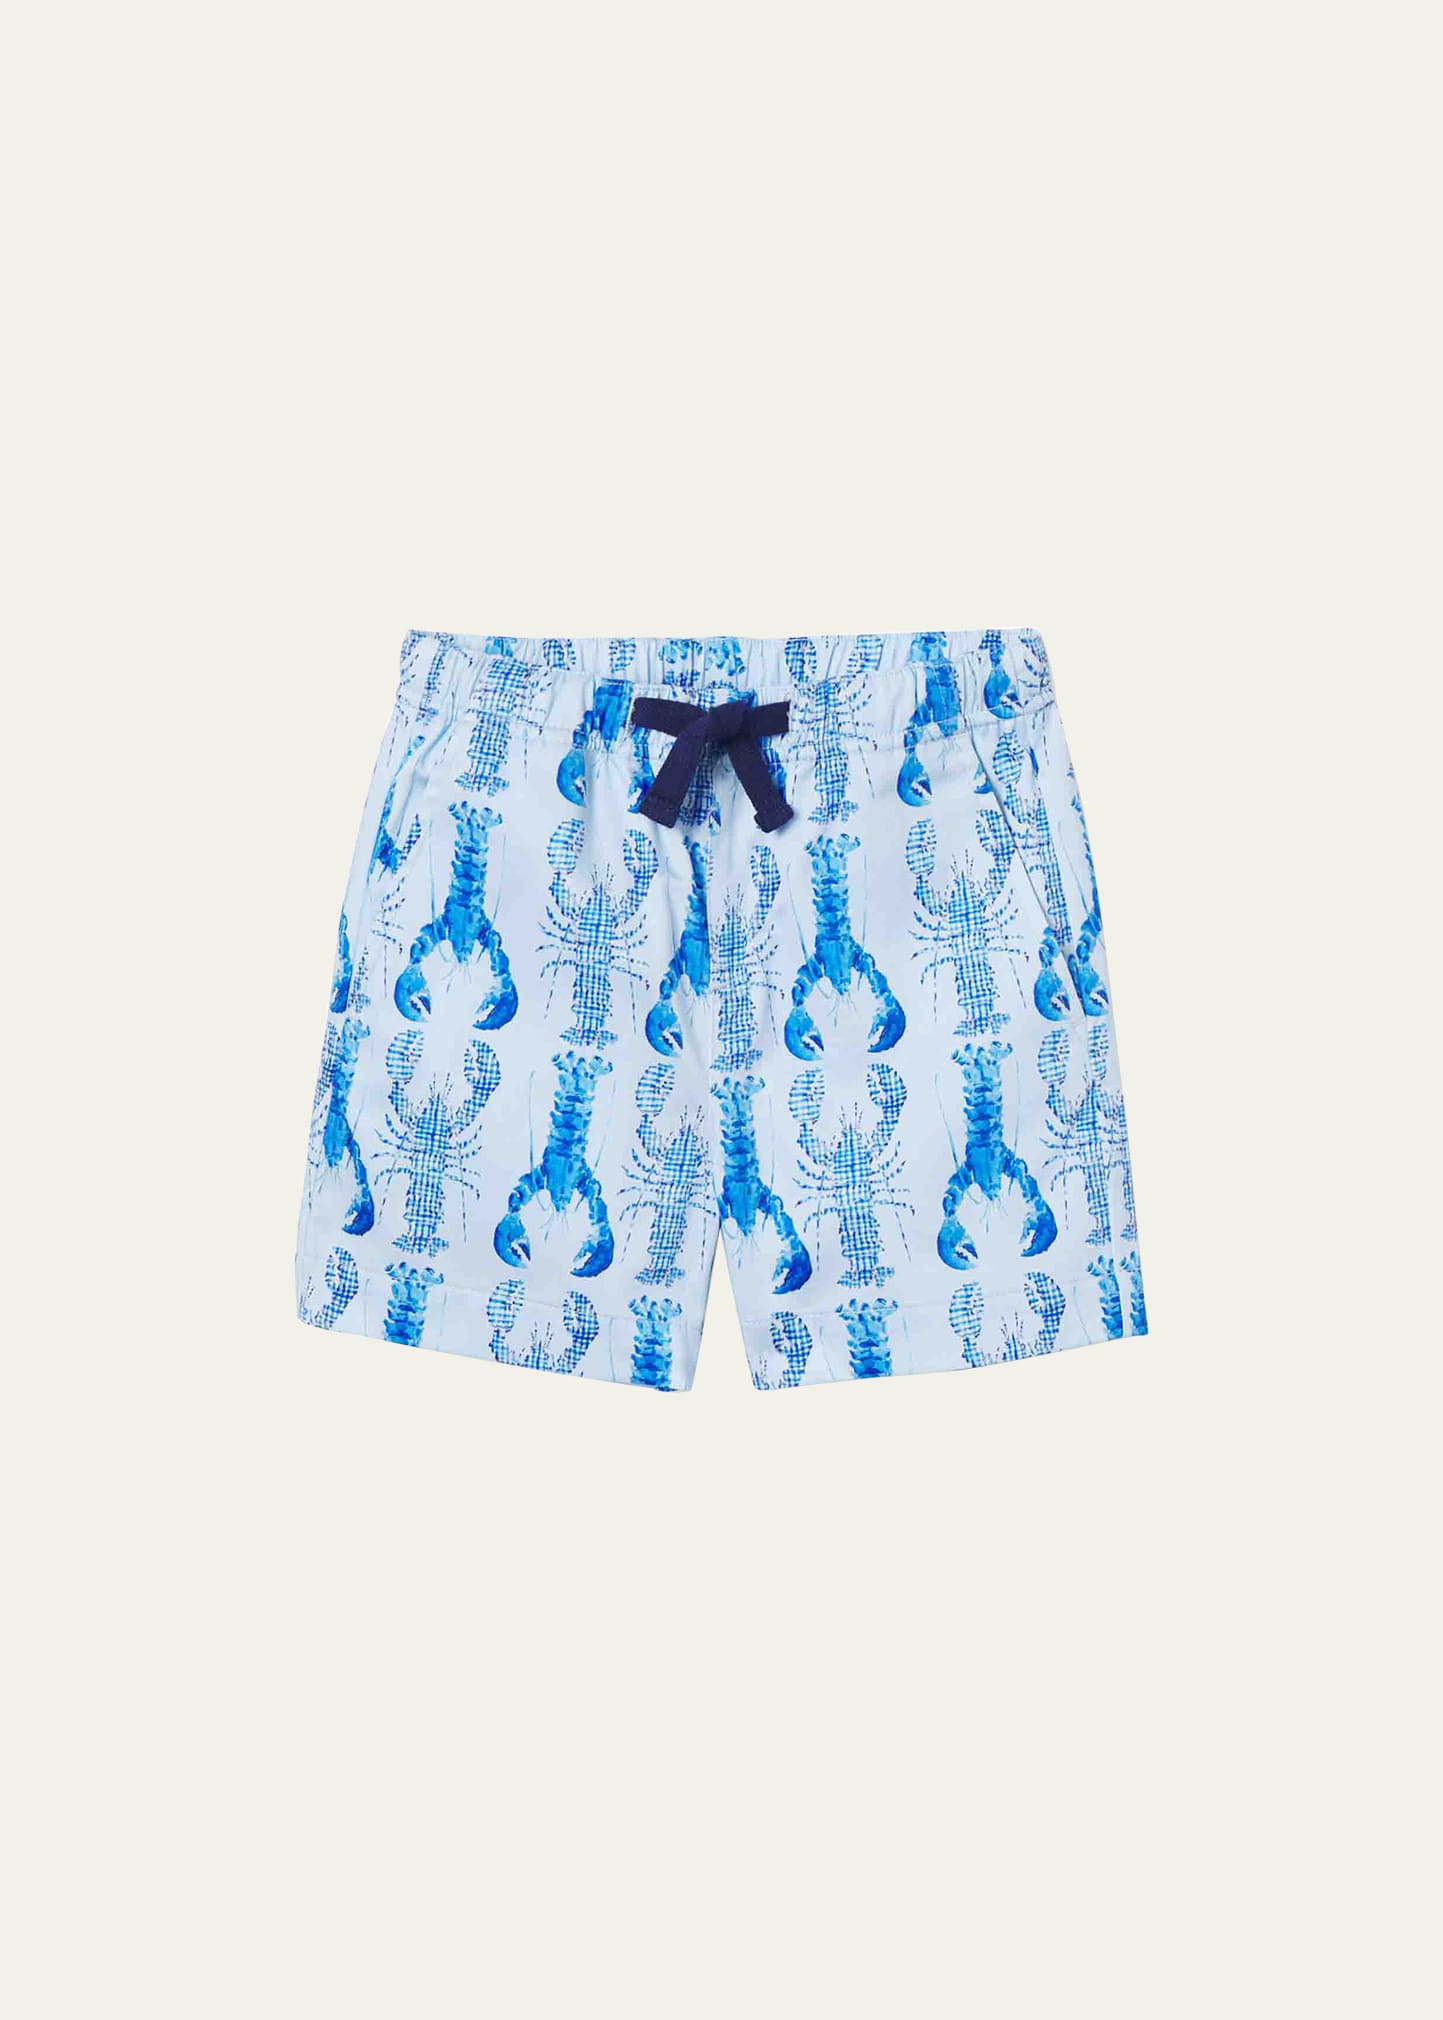 Classic Prep Childrenswear Boy's Andrew Lobster-Print Shorts, Size XS-XL